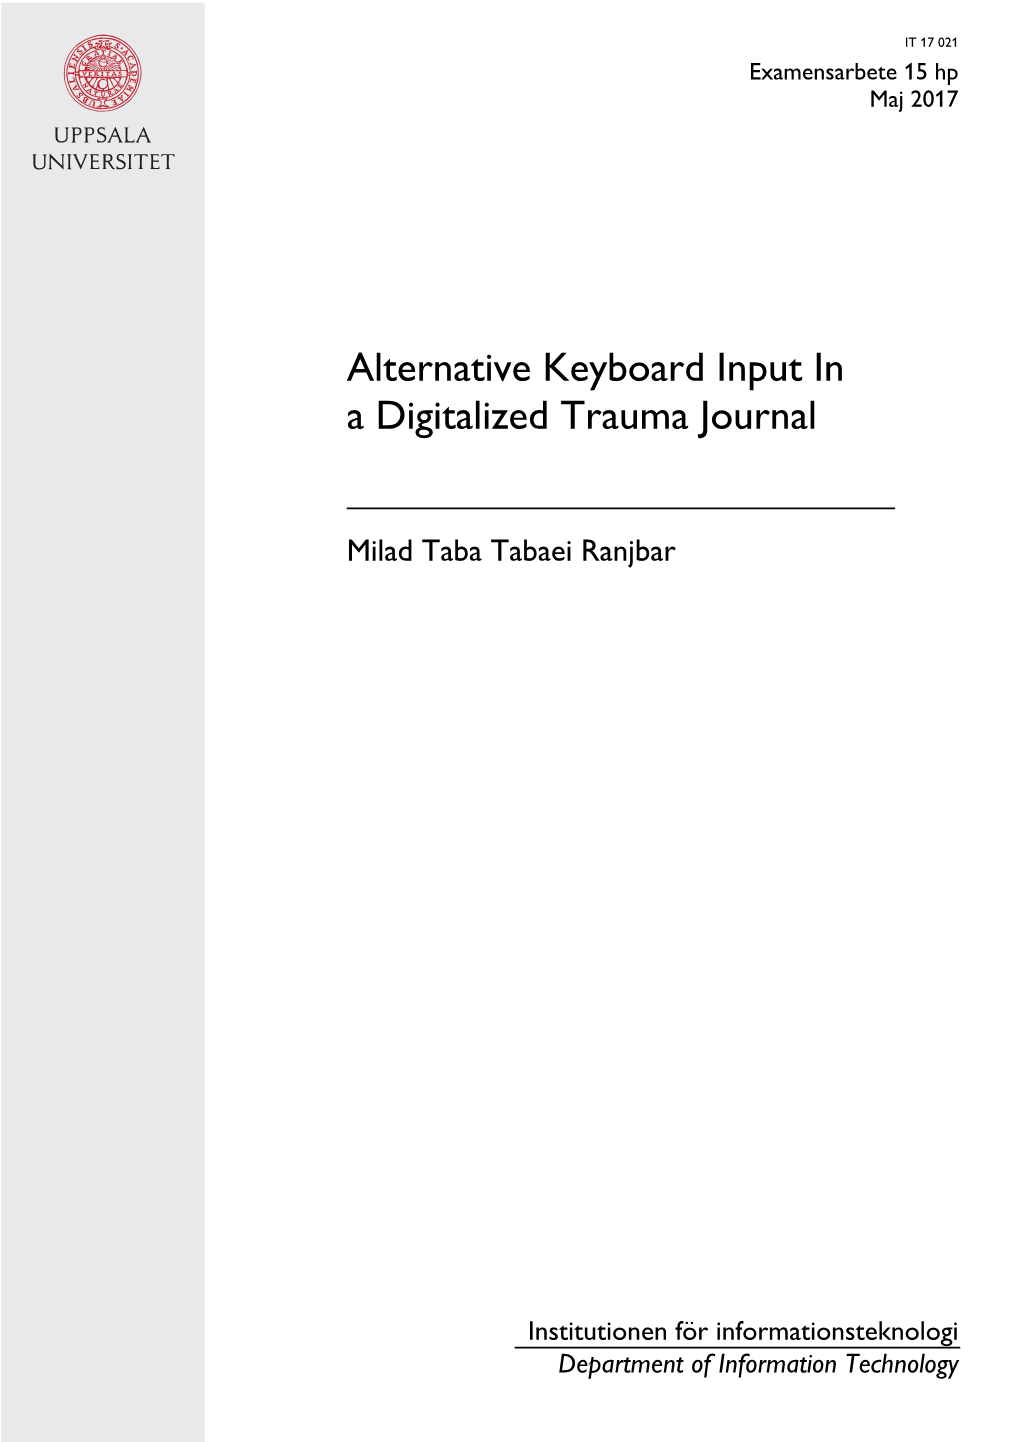 Alternative Keyboard Input in a Digitalized Trauma Journal